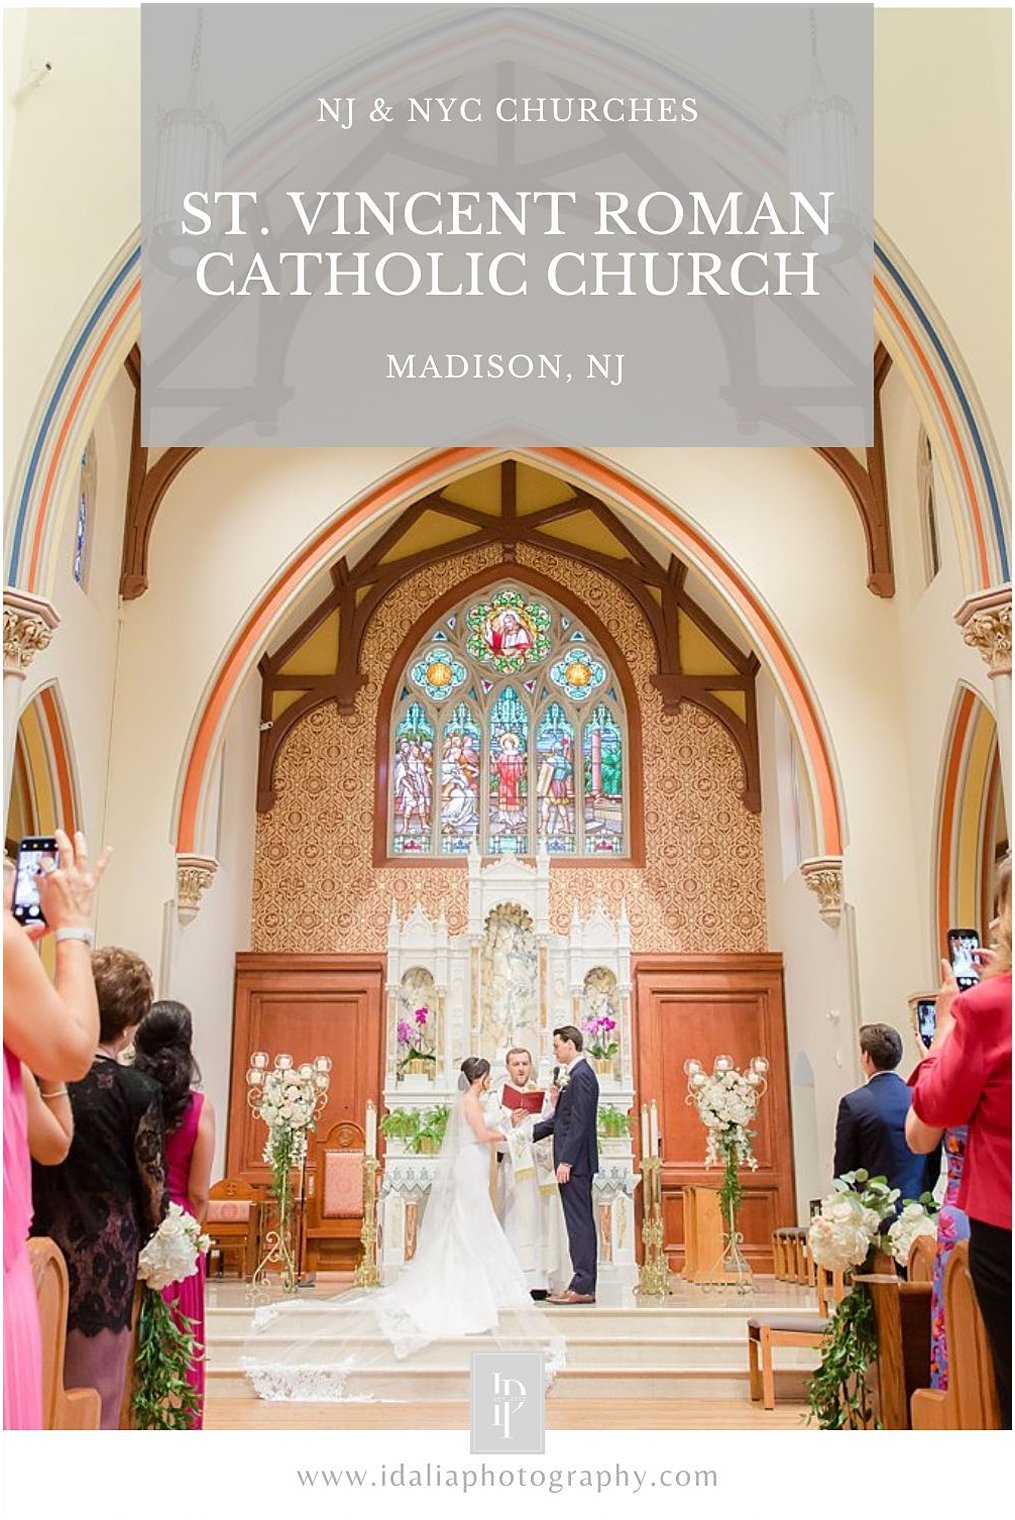 Wedding ceremony at St. Vincent's Roman Catholic Church in Madison, NJ